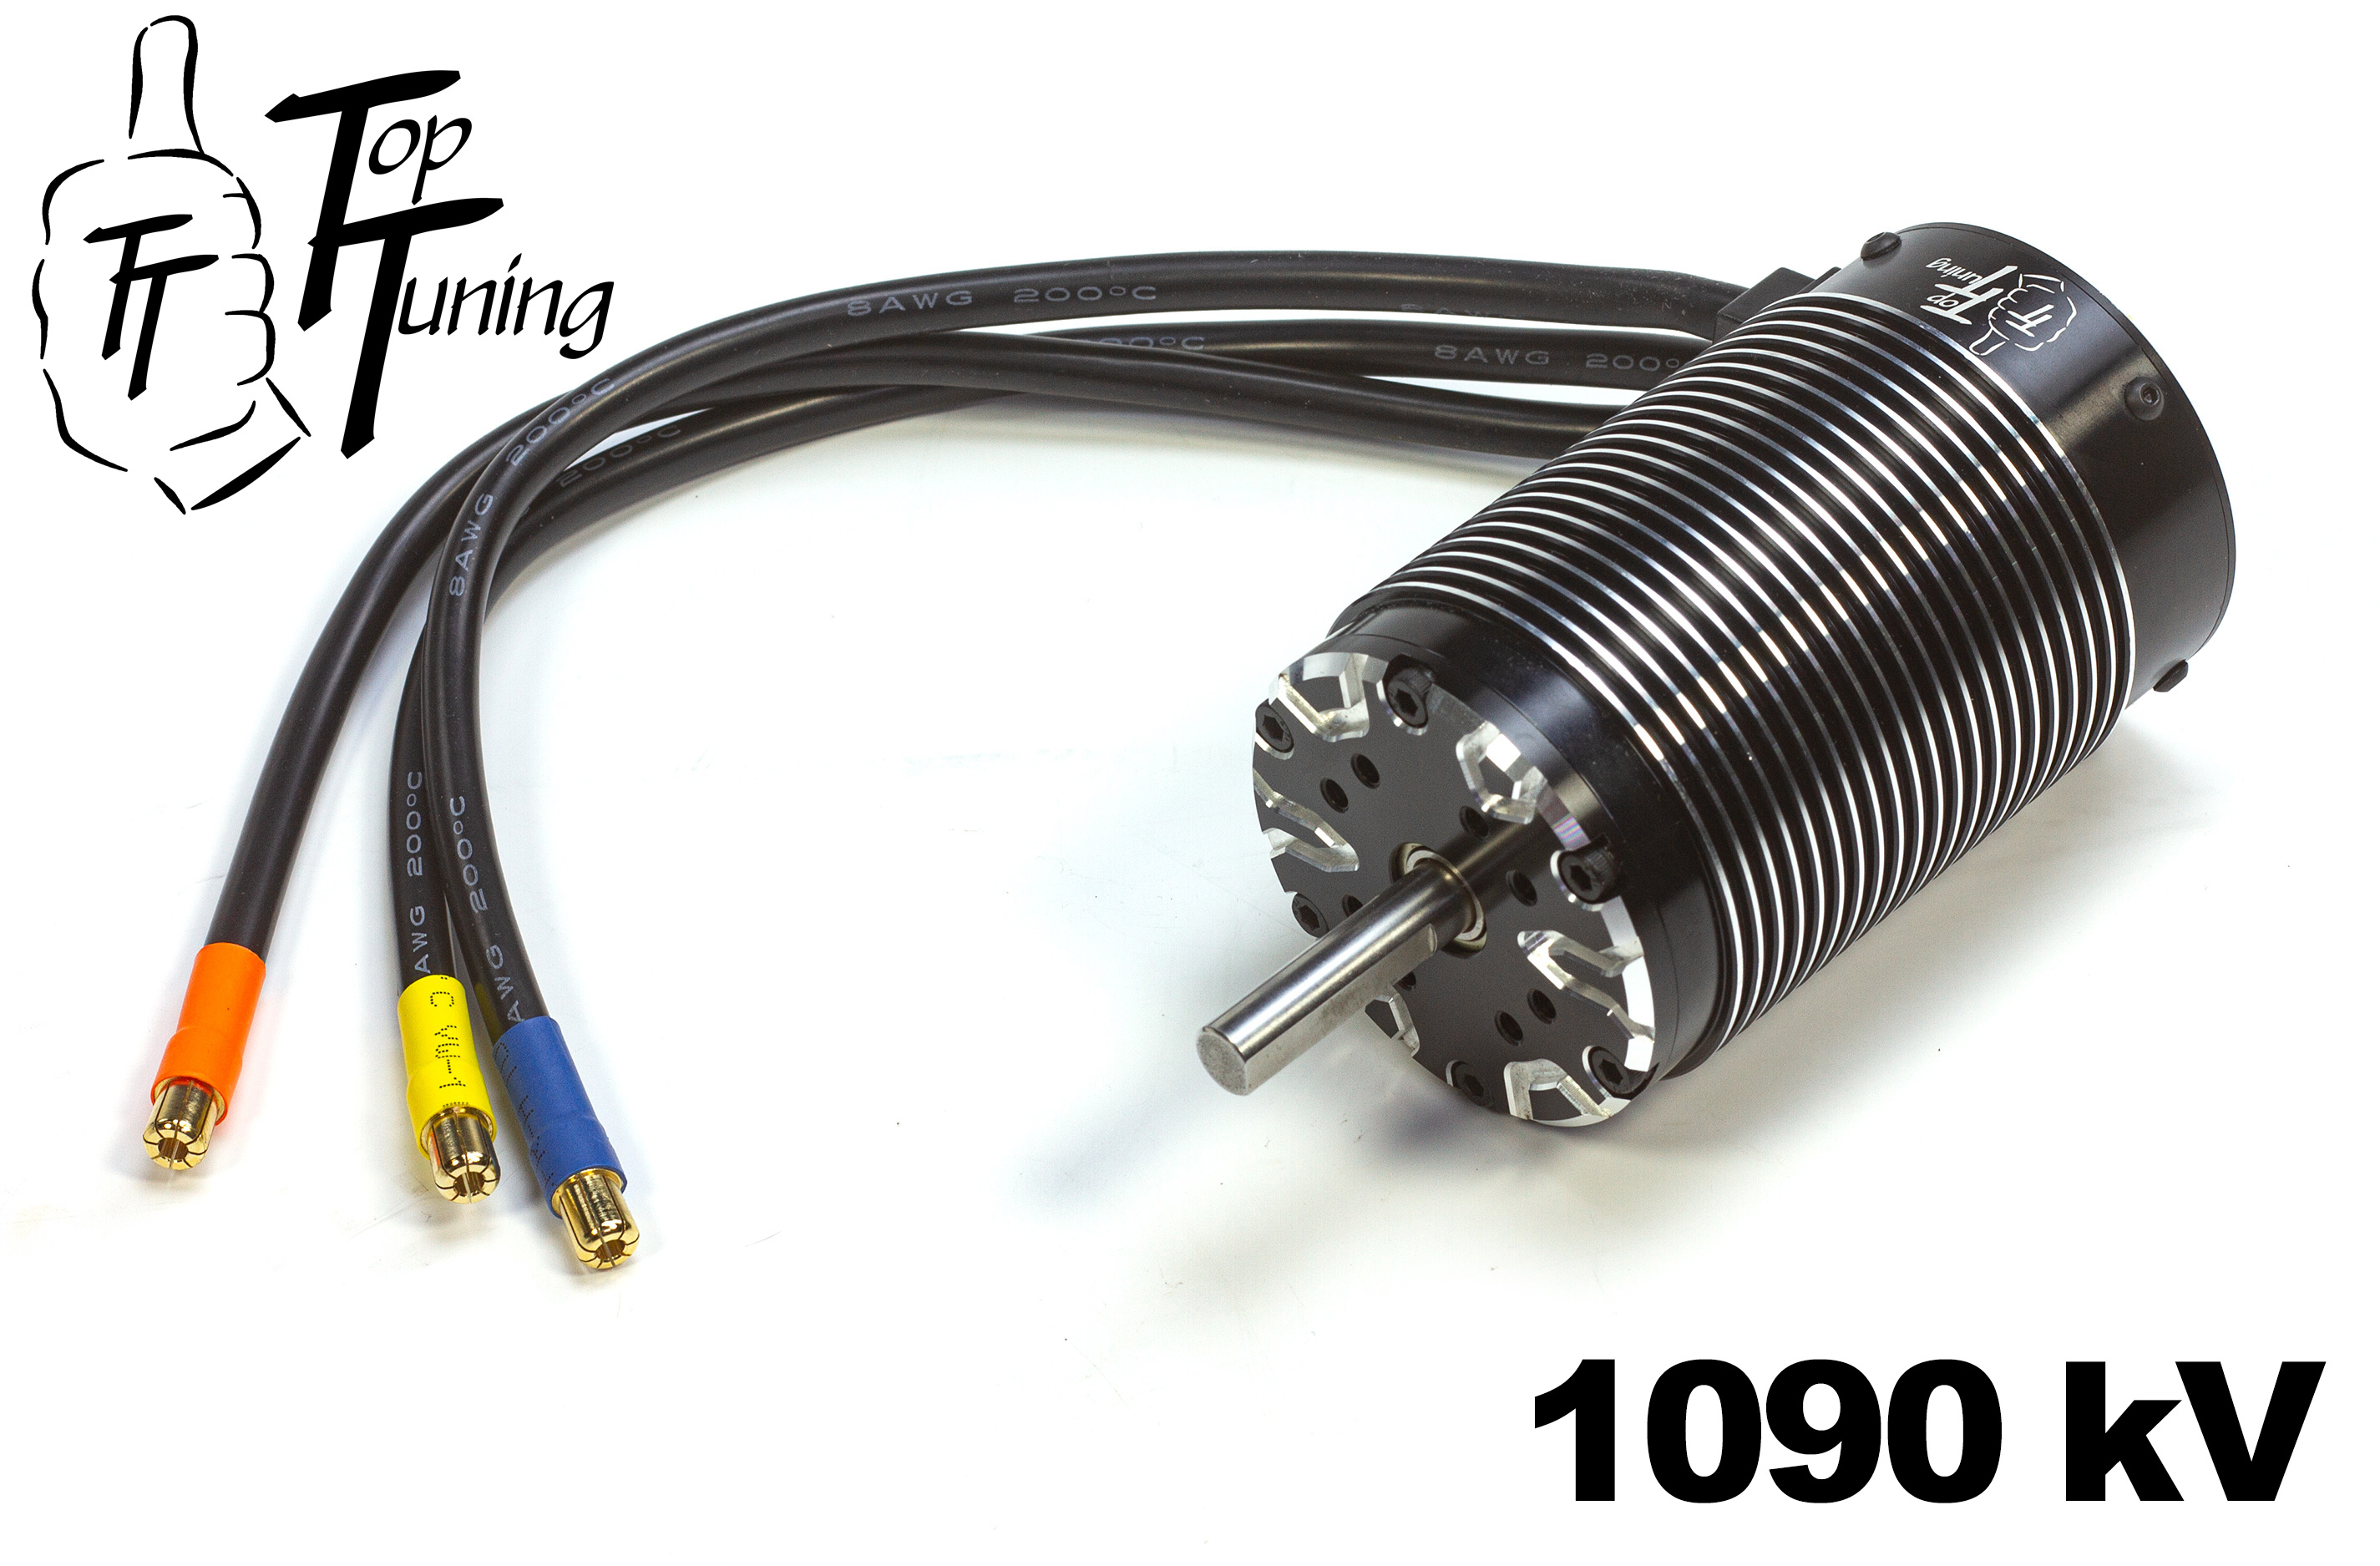 TT5692 Top Tuning Brushless Motor 1090 kV